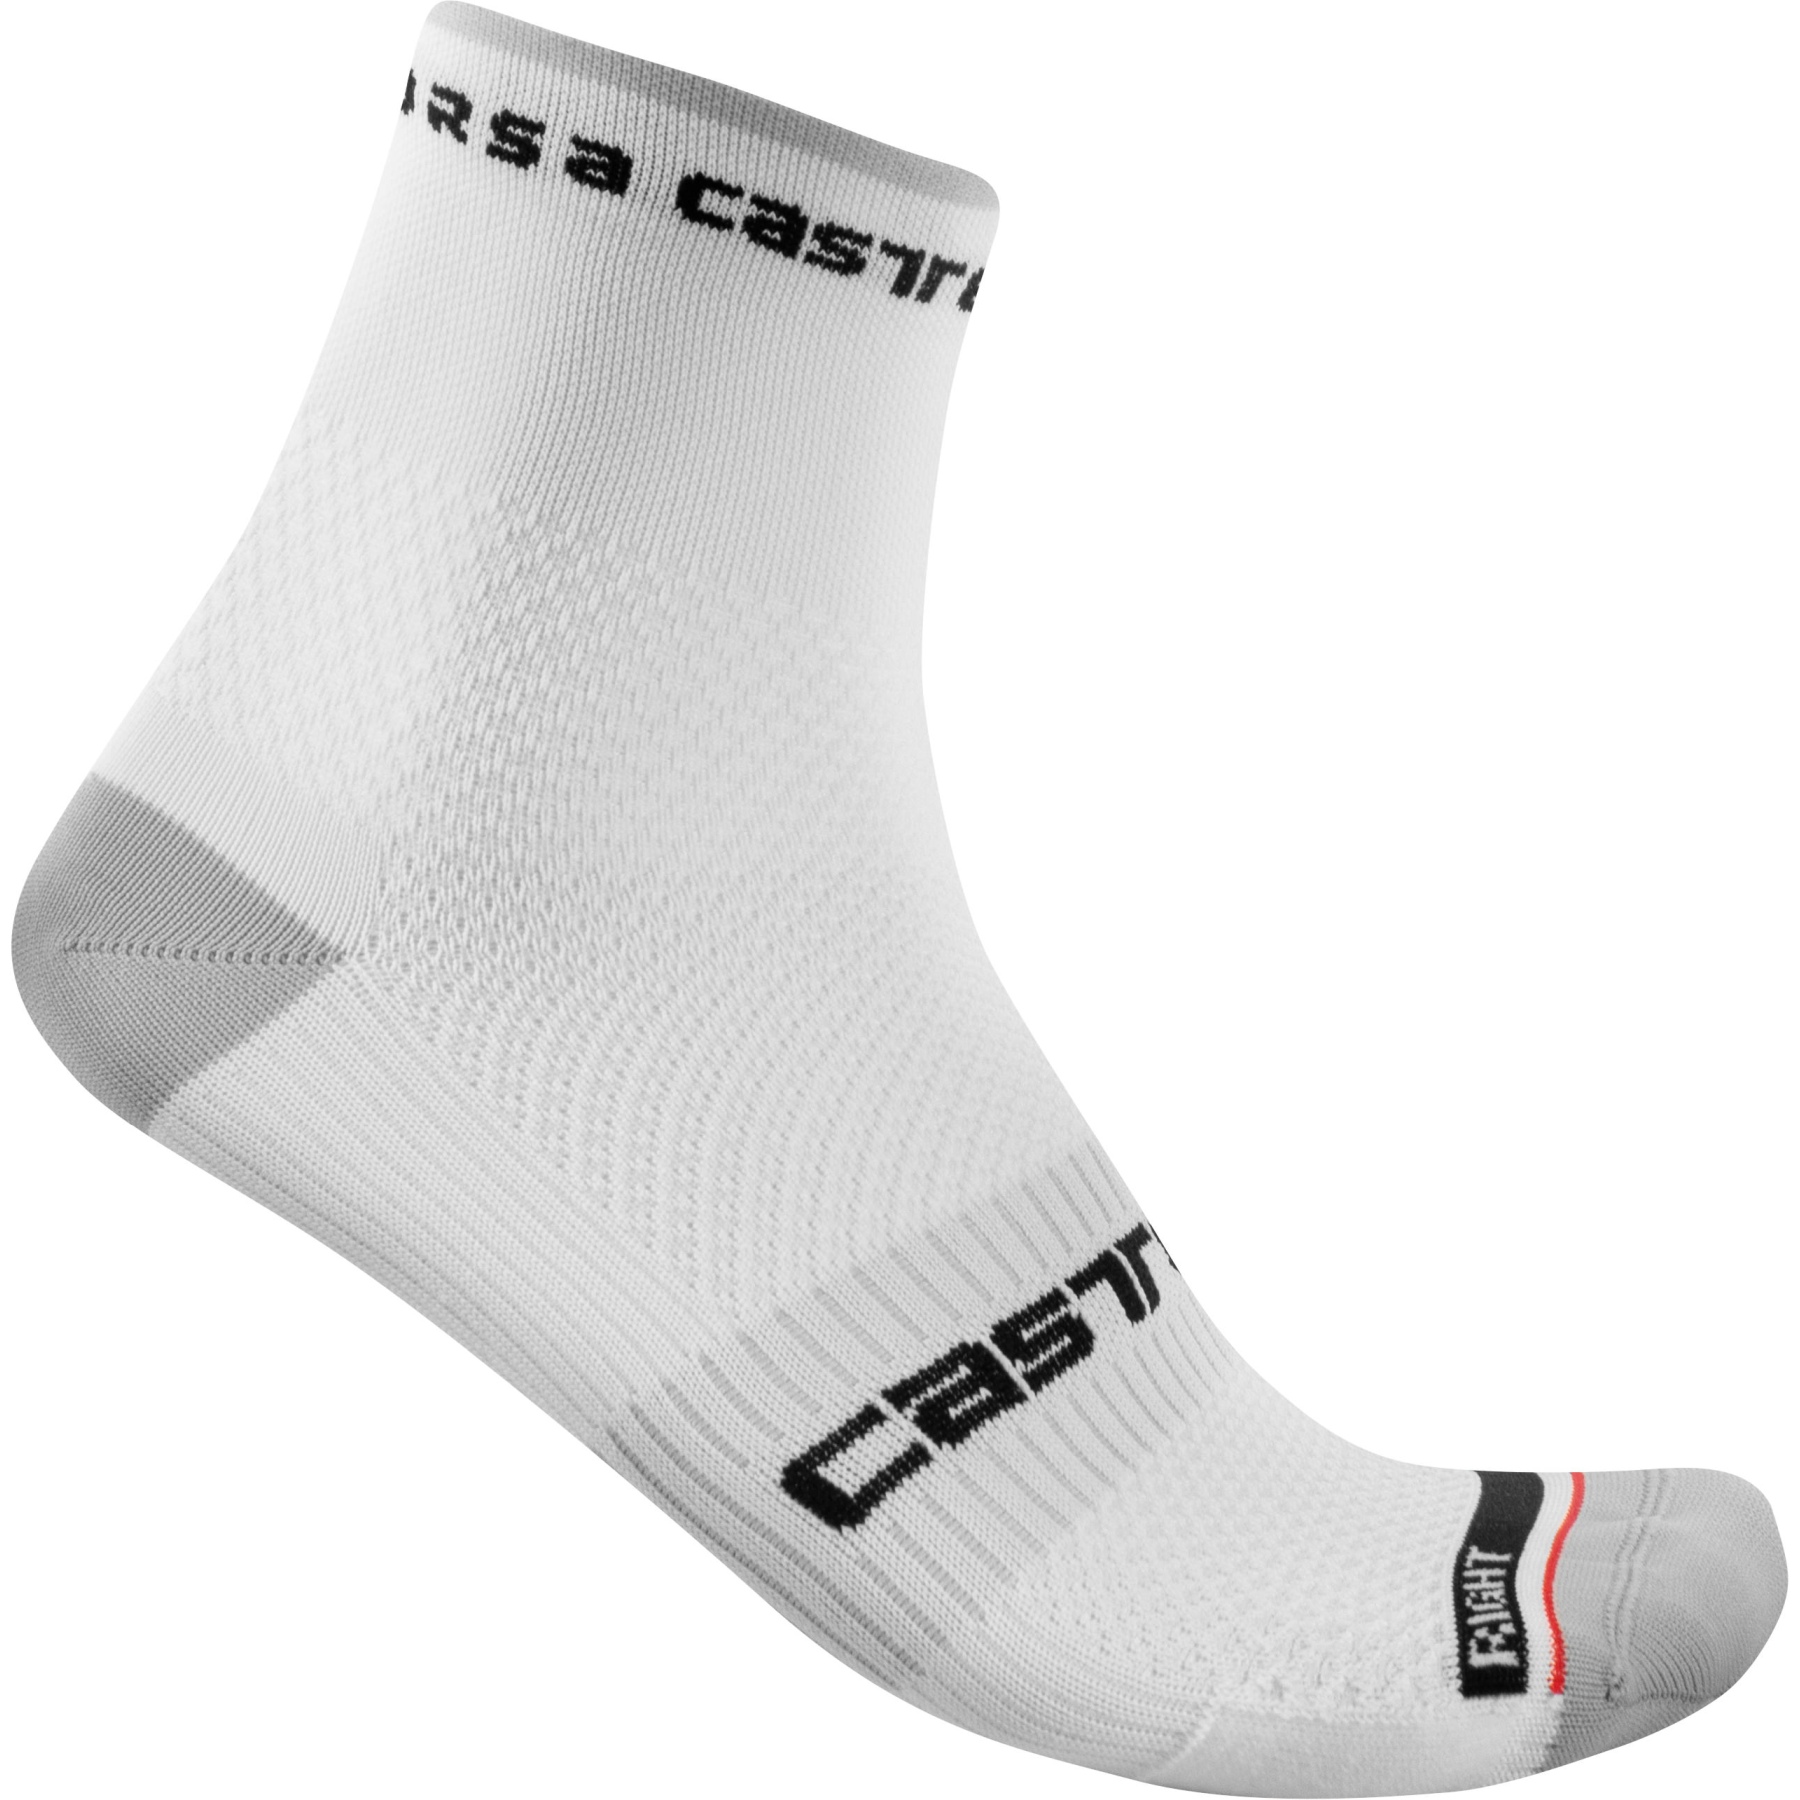 Image of Castelli Rosso Corsa Pro 9 Socks - white 001